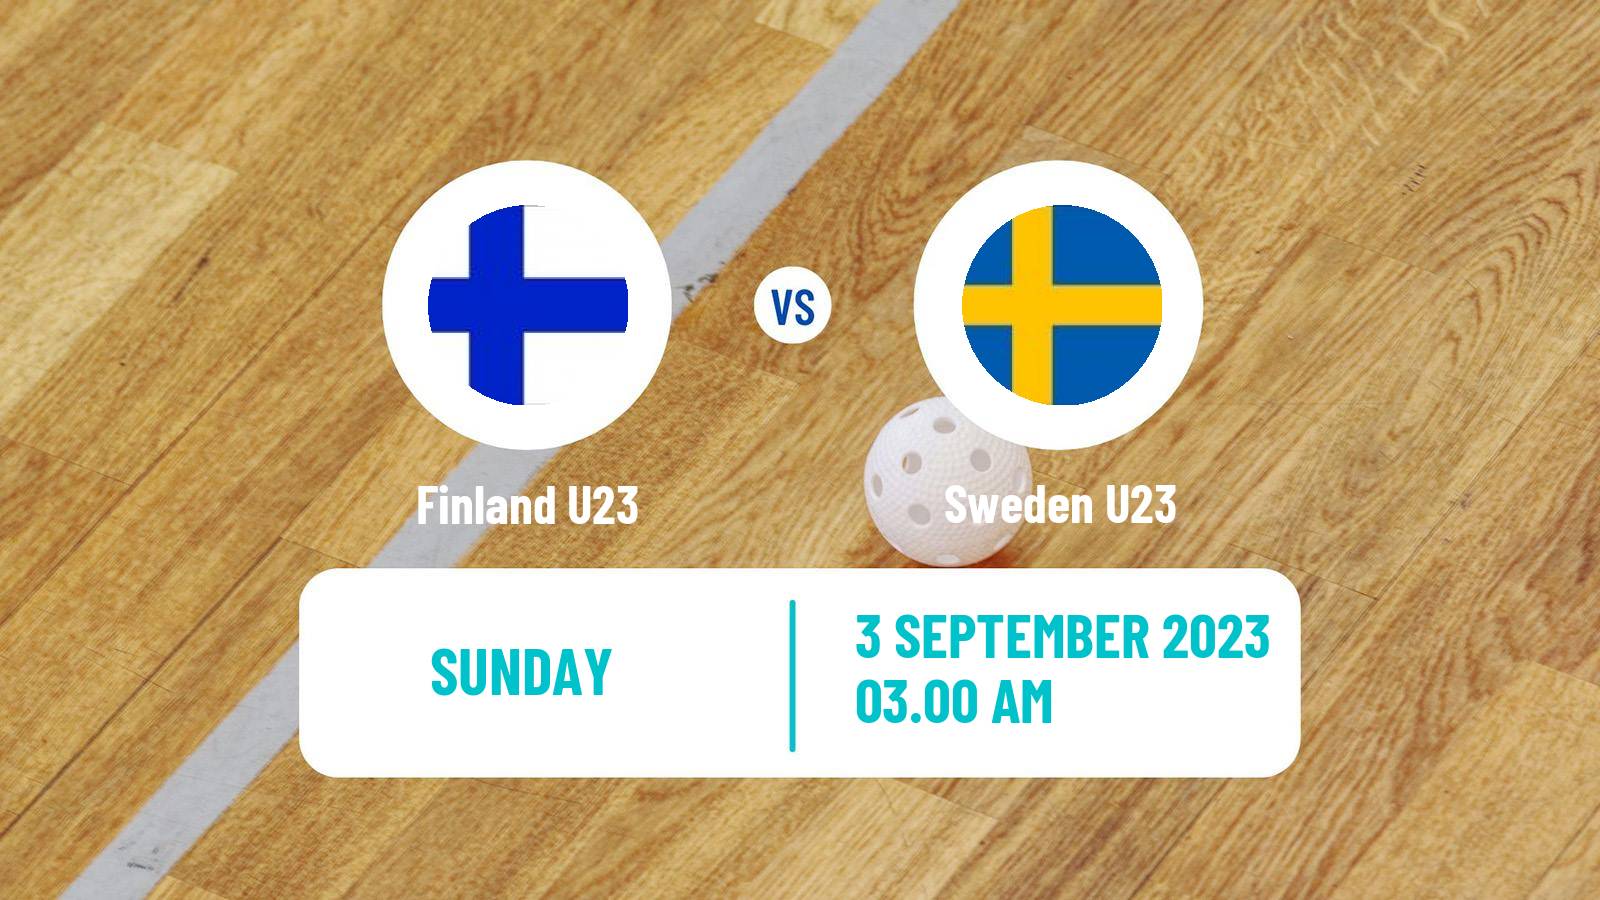 Floorball Friendly International Floorball Finland U23 - Sweden U23